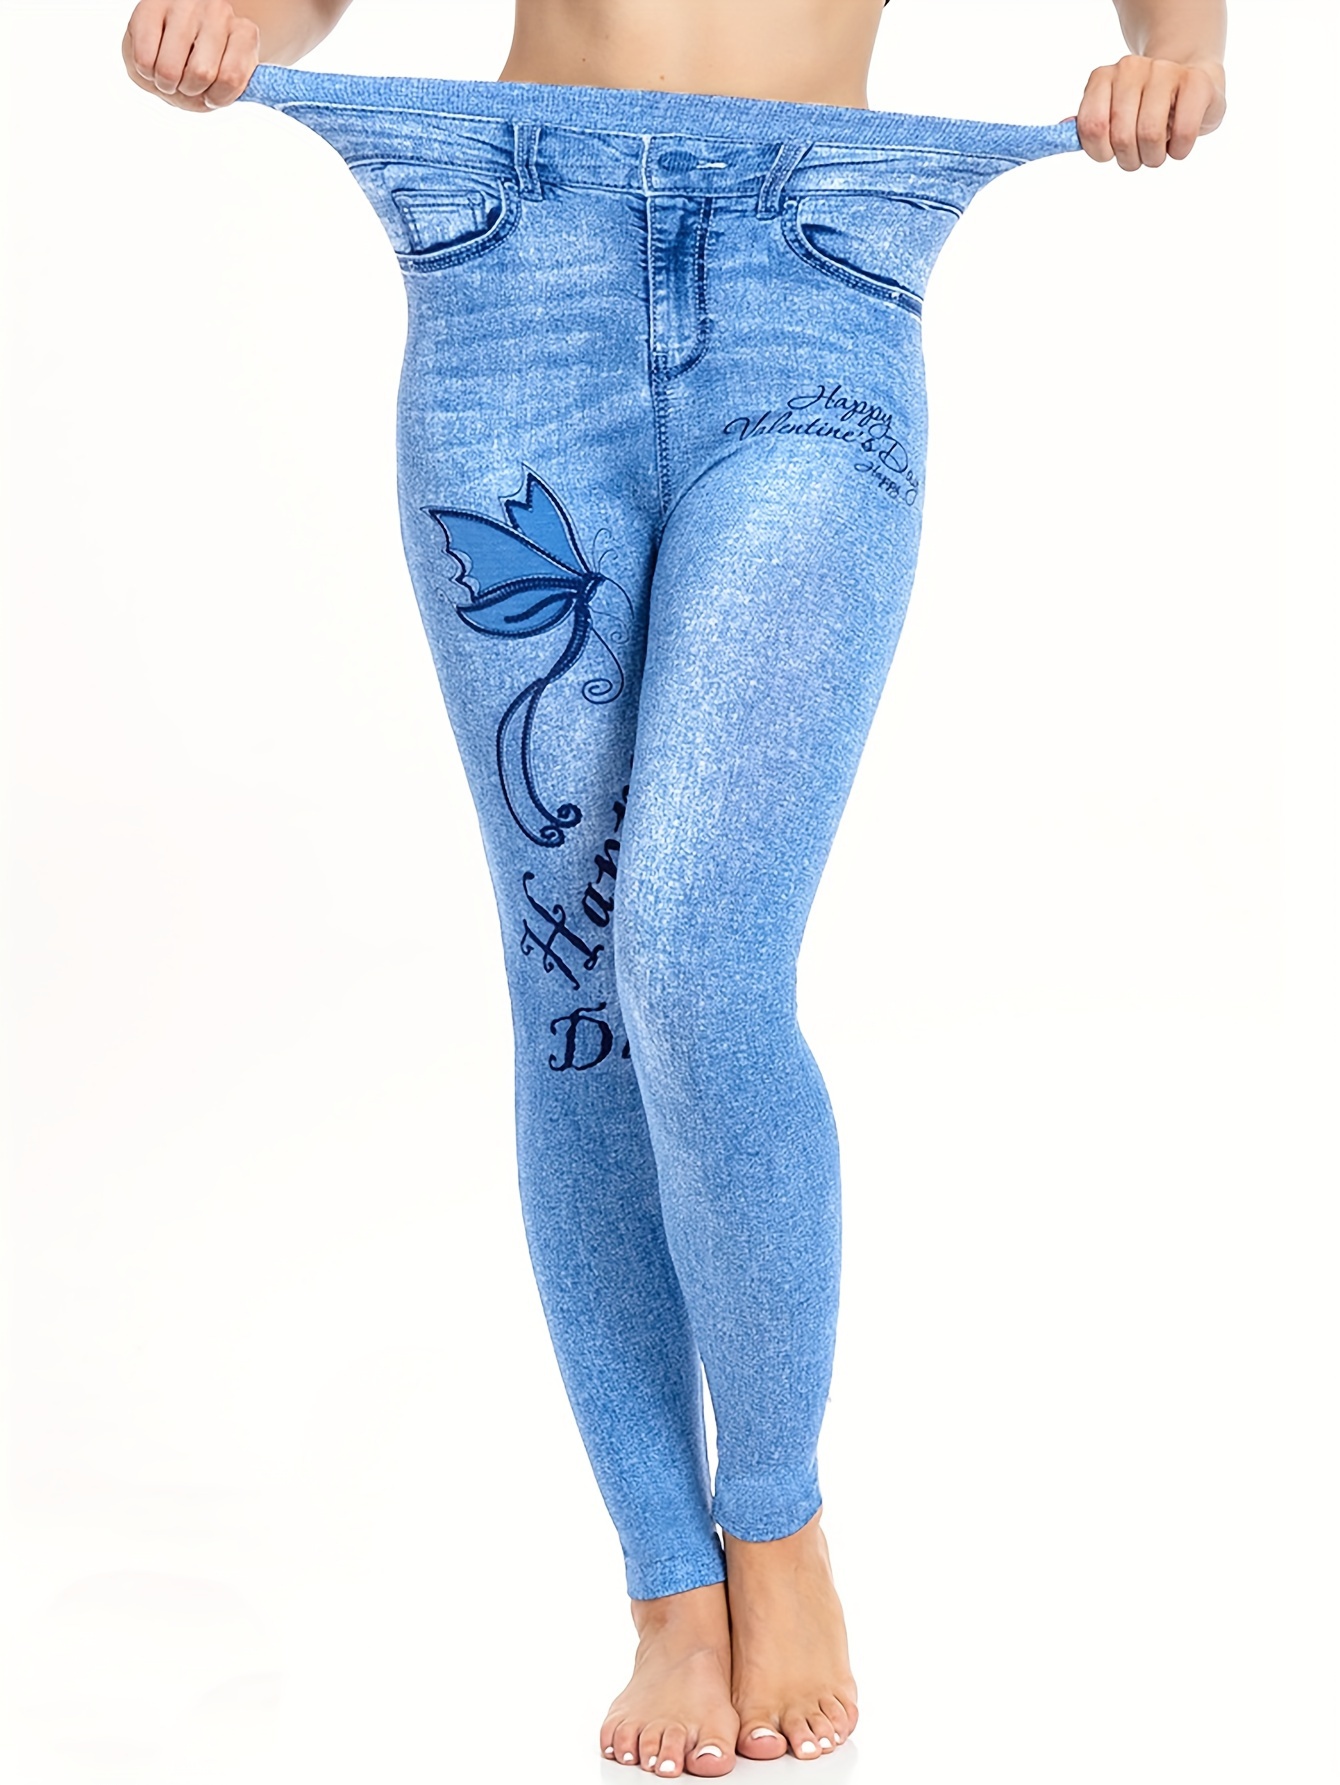 Avamo Women Look Print Jeggings High Waist Printed Denim Leggings Plus Size  Fake Jeans Slim Fit Bottoms Workout Pencil Pants Blue F 3XL 